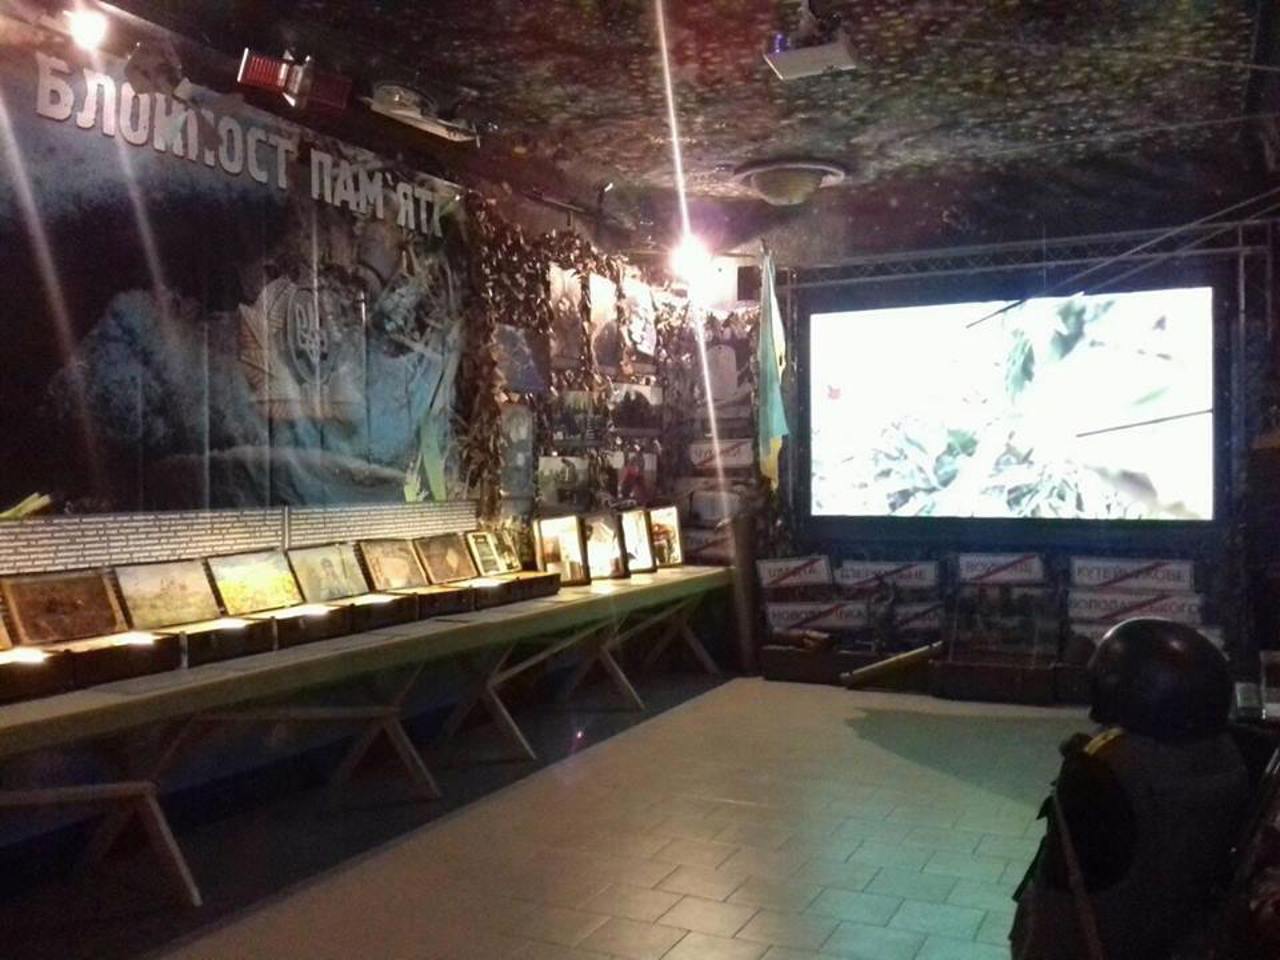 Bomber Aviation Museum, Poltava